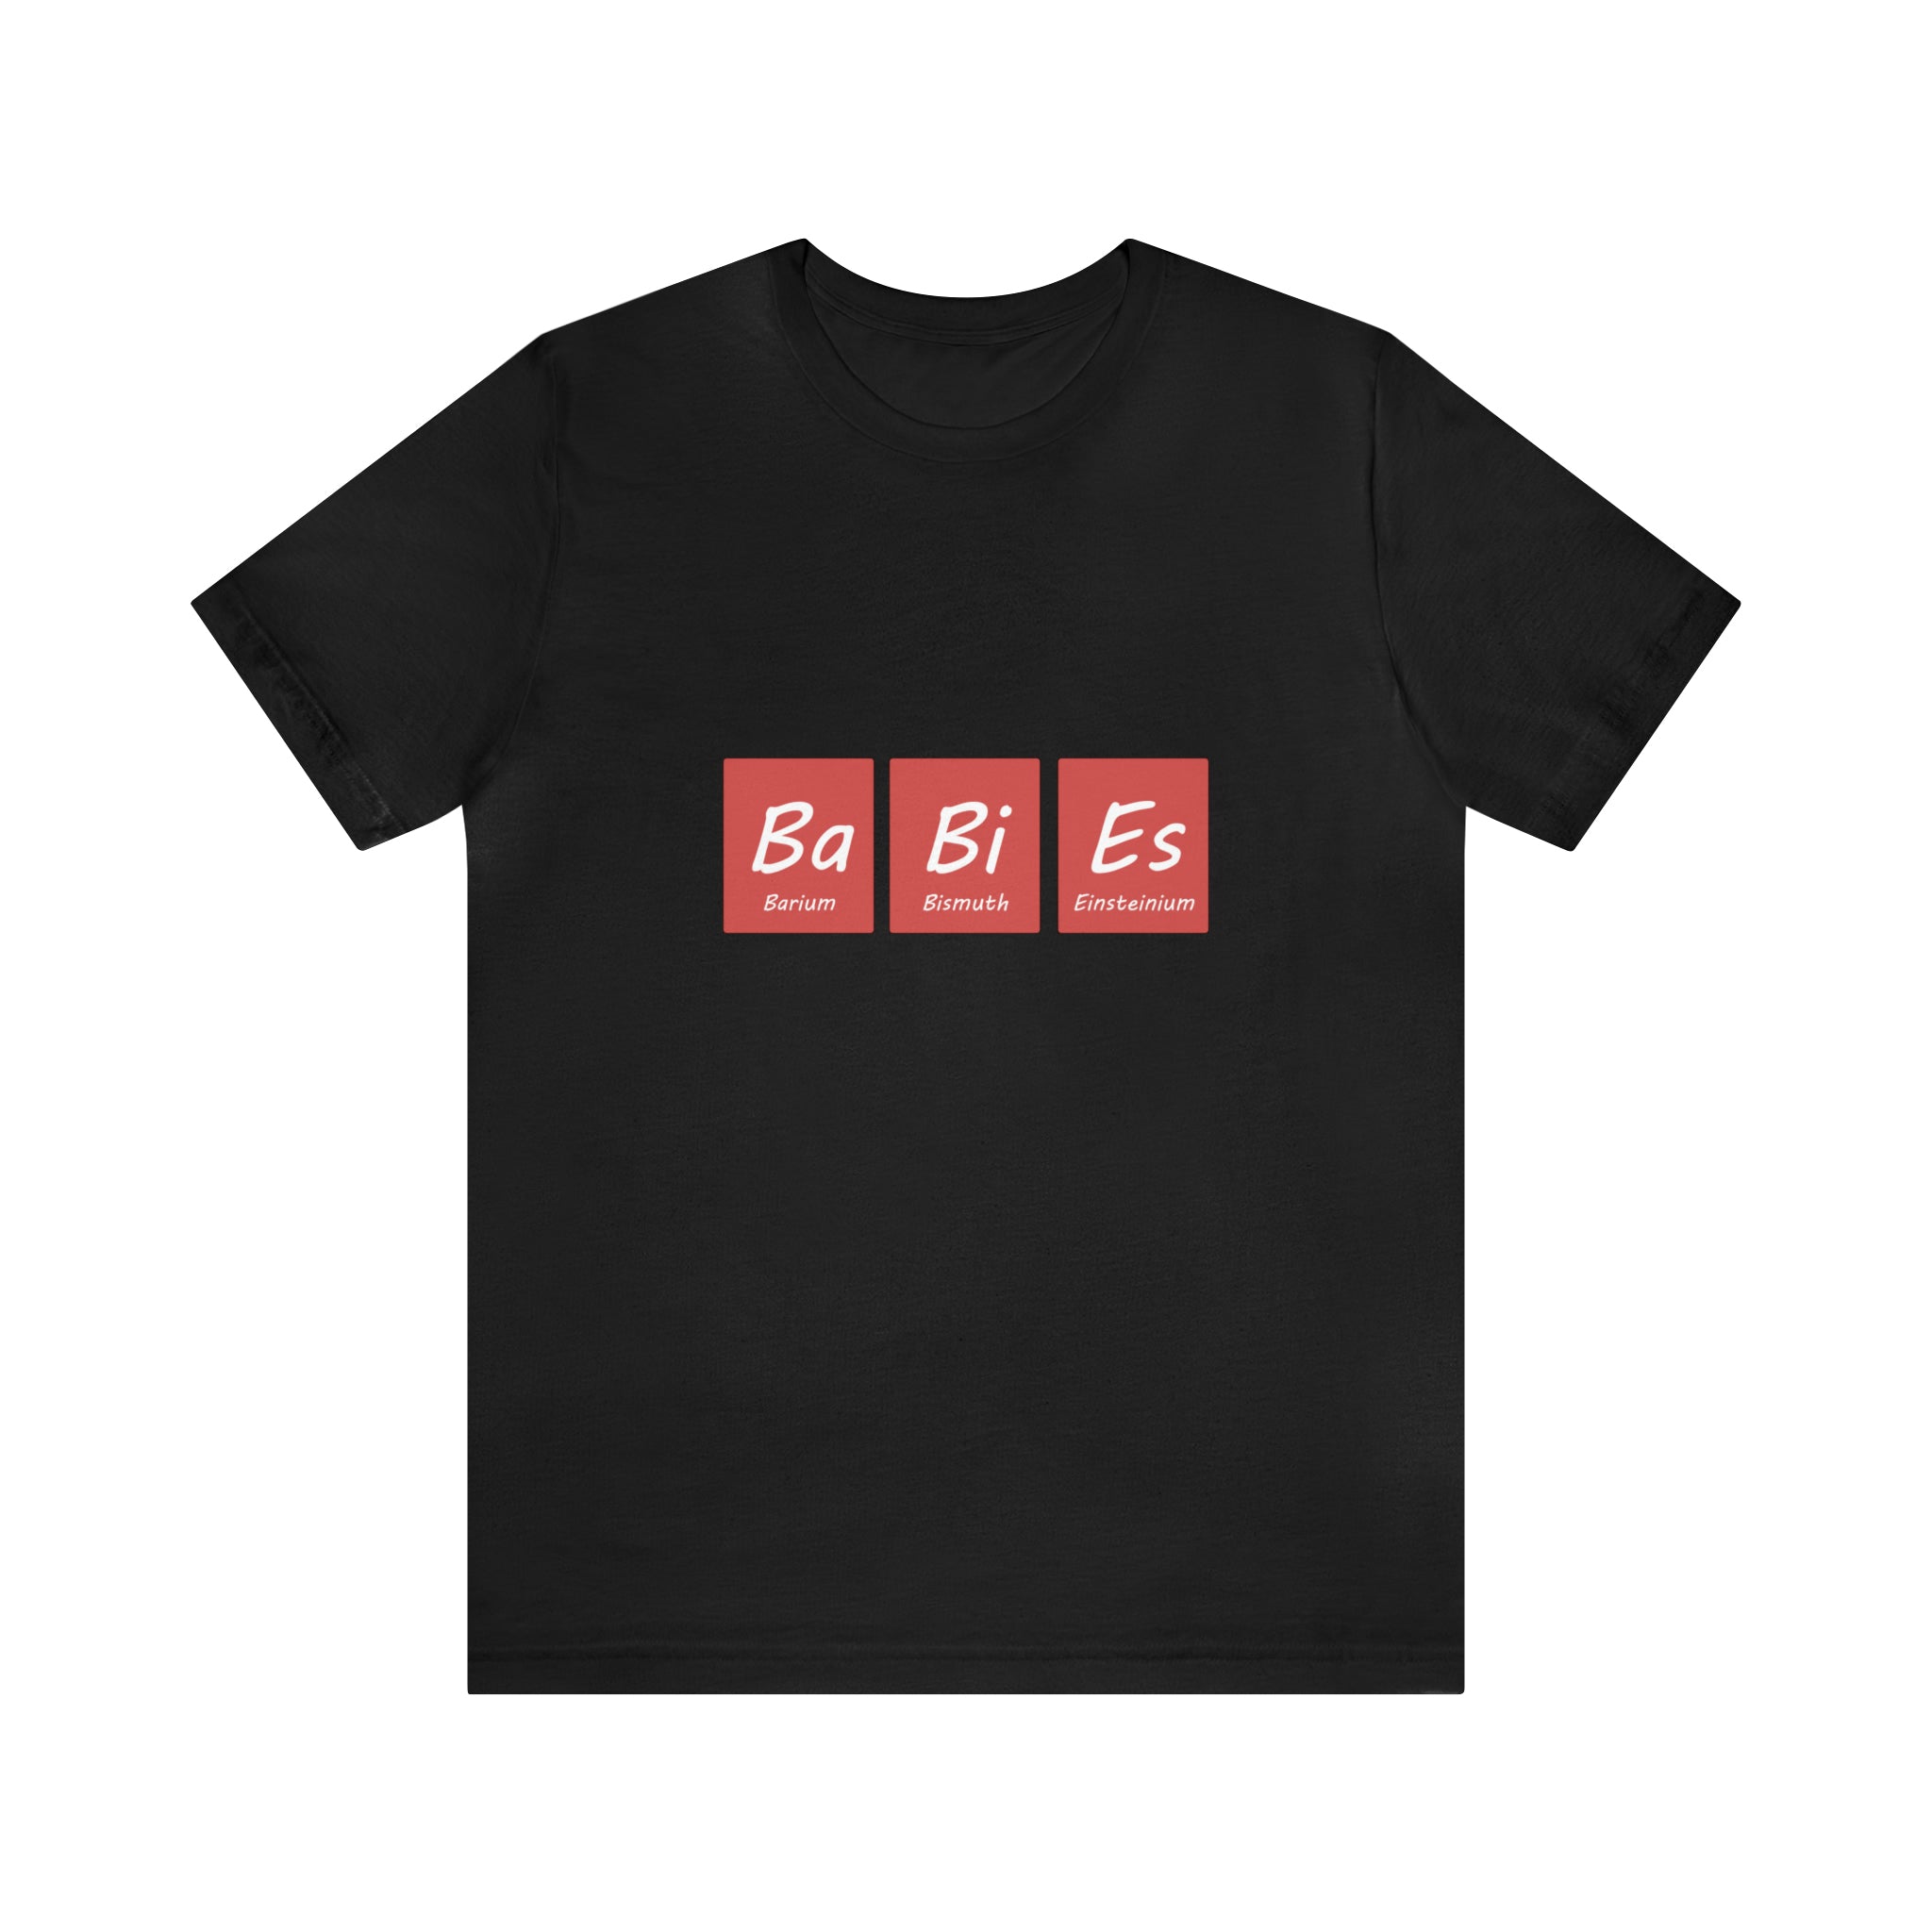 A Ba - Bi - Es T-Shirt with a unique color combination of black and red squares.